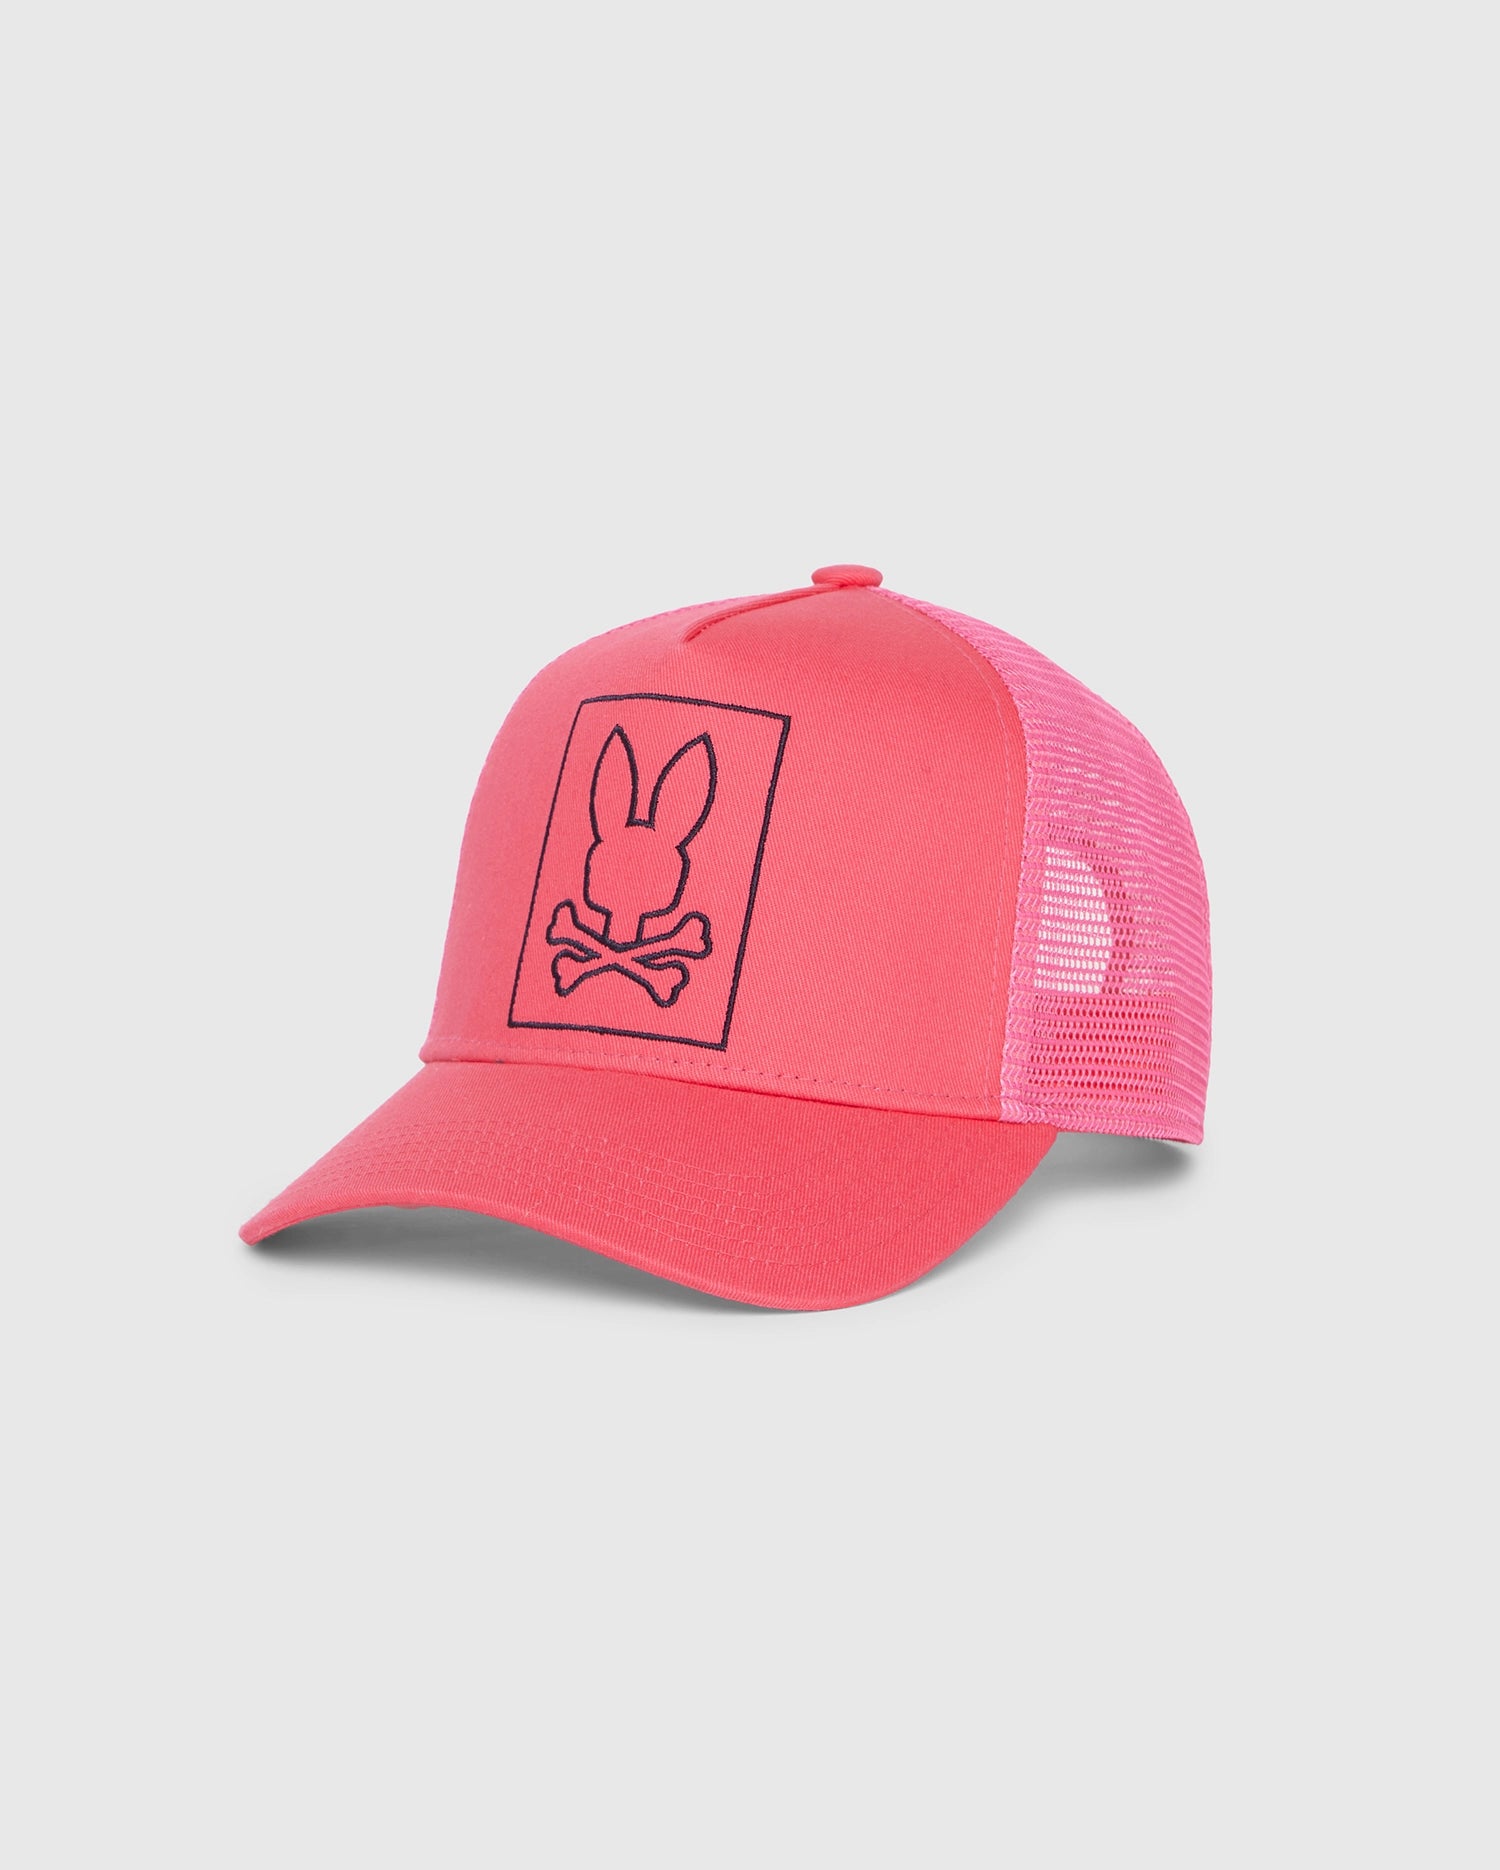 Life is Good Pink Baseball Hat Strap Back Hat hb2 -  Canada